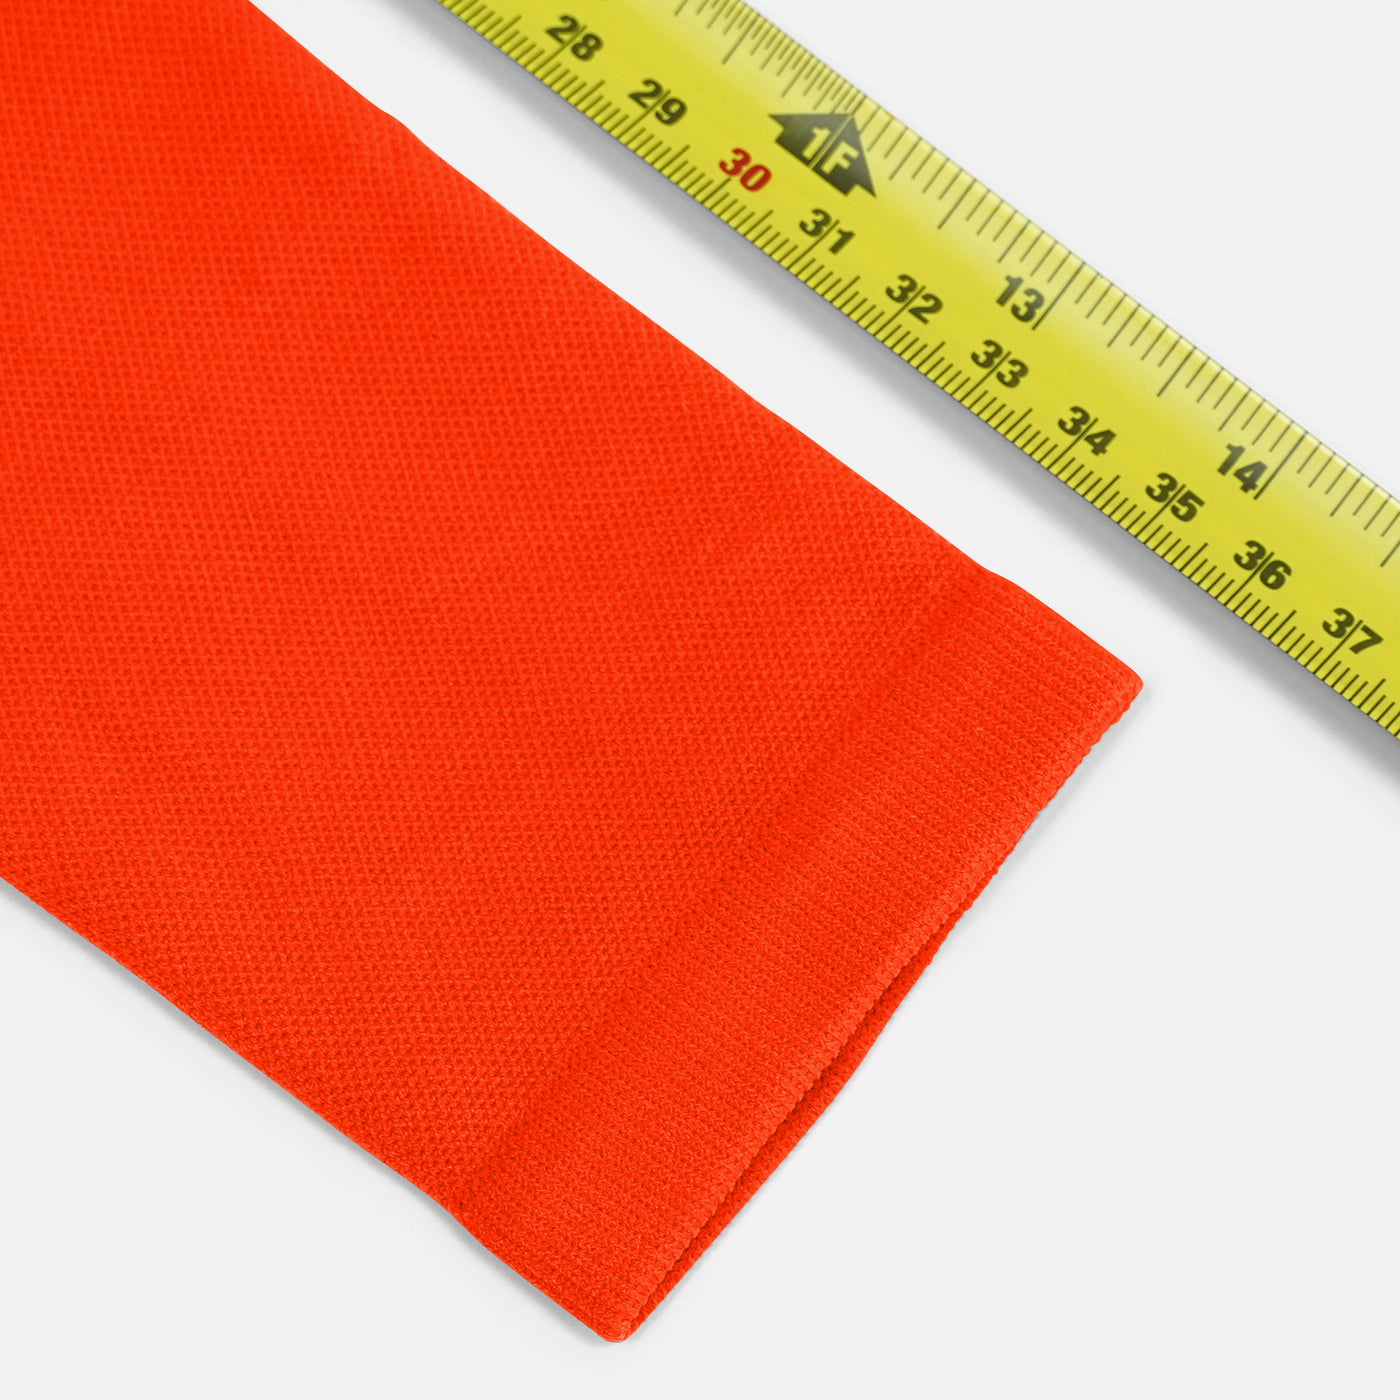 Hue Orange One Size Fits All Football Arm Sleeve